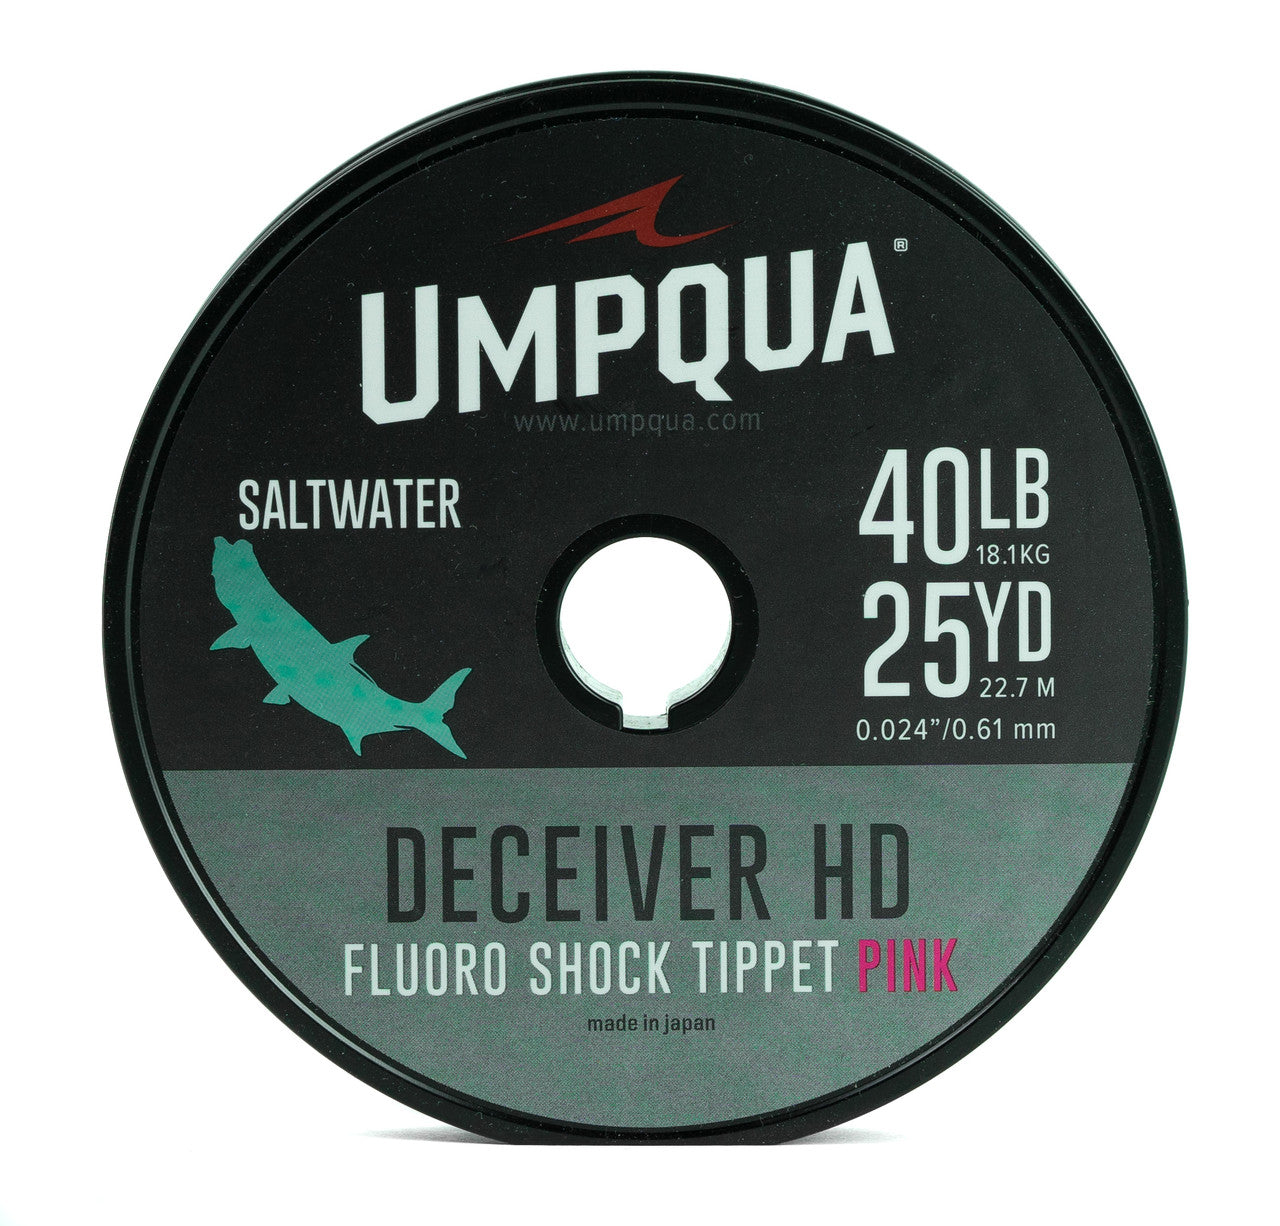 Umpqua Deceiver HD Saltwater Fluorocarbon Shock Tippet